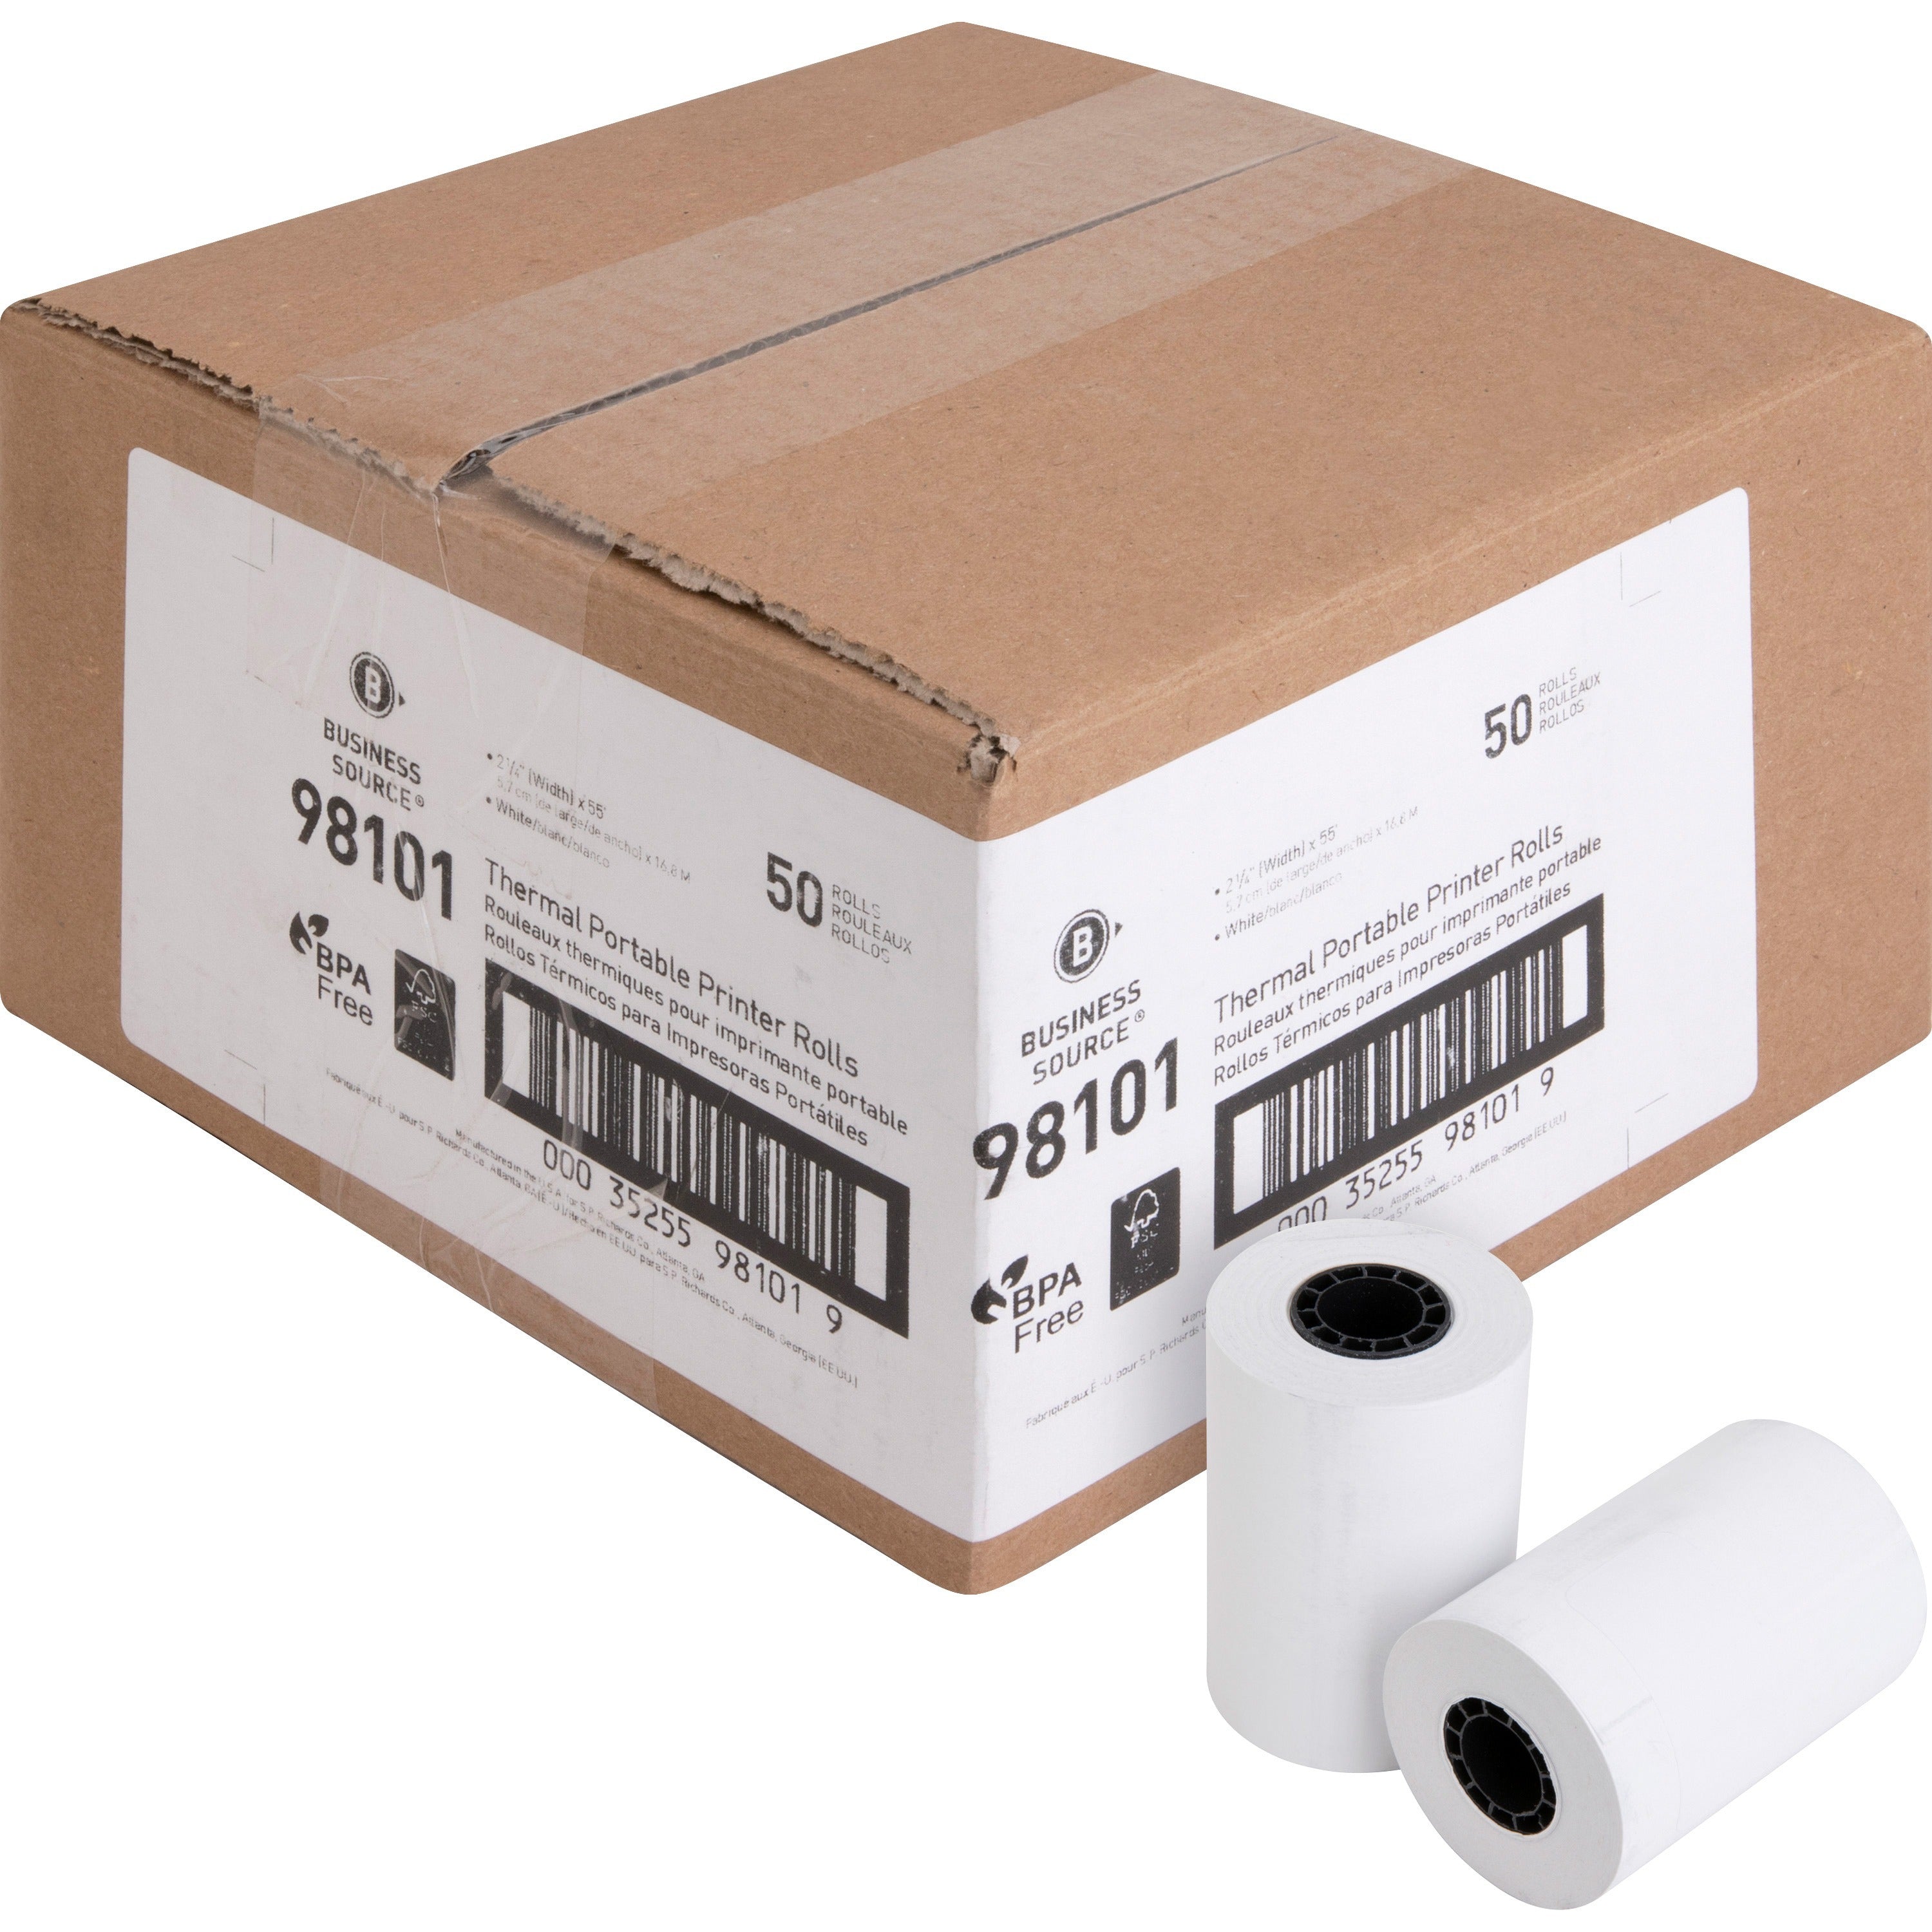 business-source-portable-printer-thermal-rolls-2-1-4-x-55-ft-50-carton-bpa-free-white_bsn98101 - 1